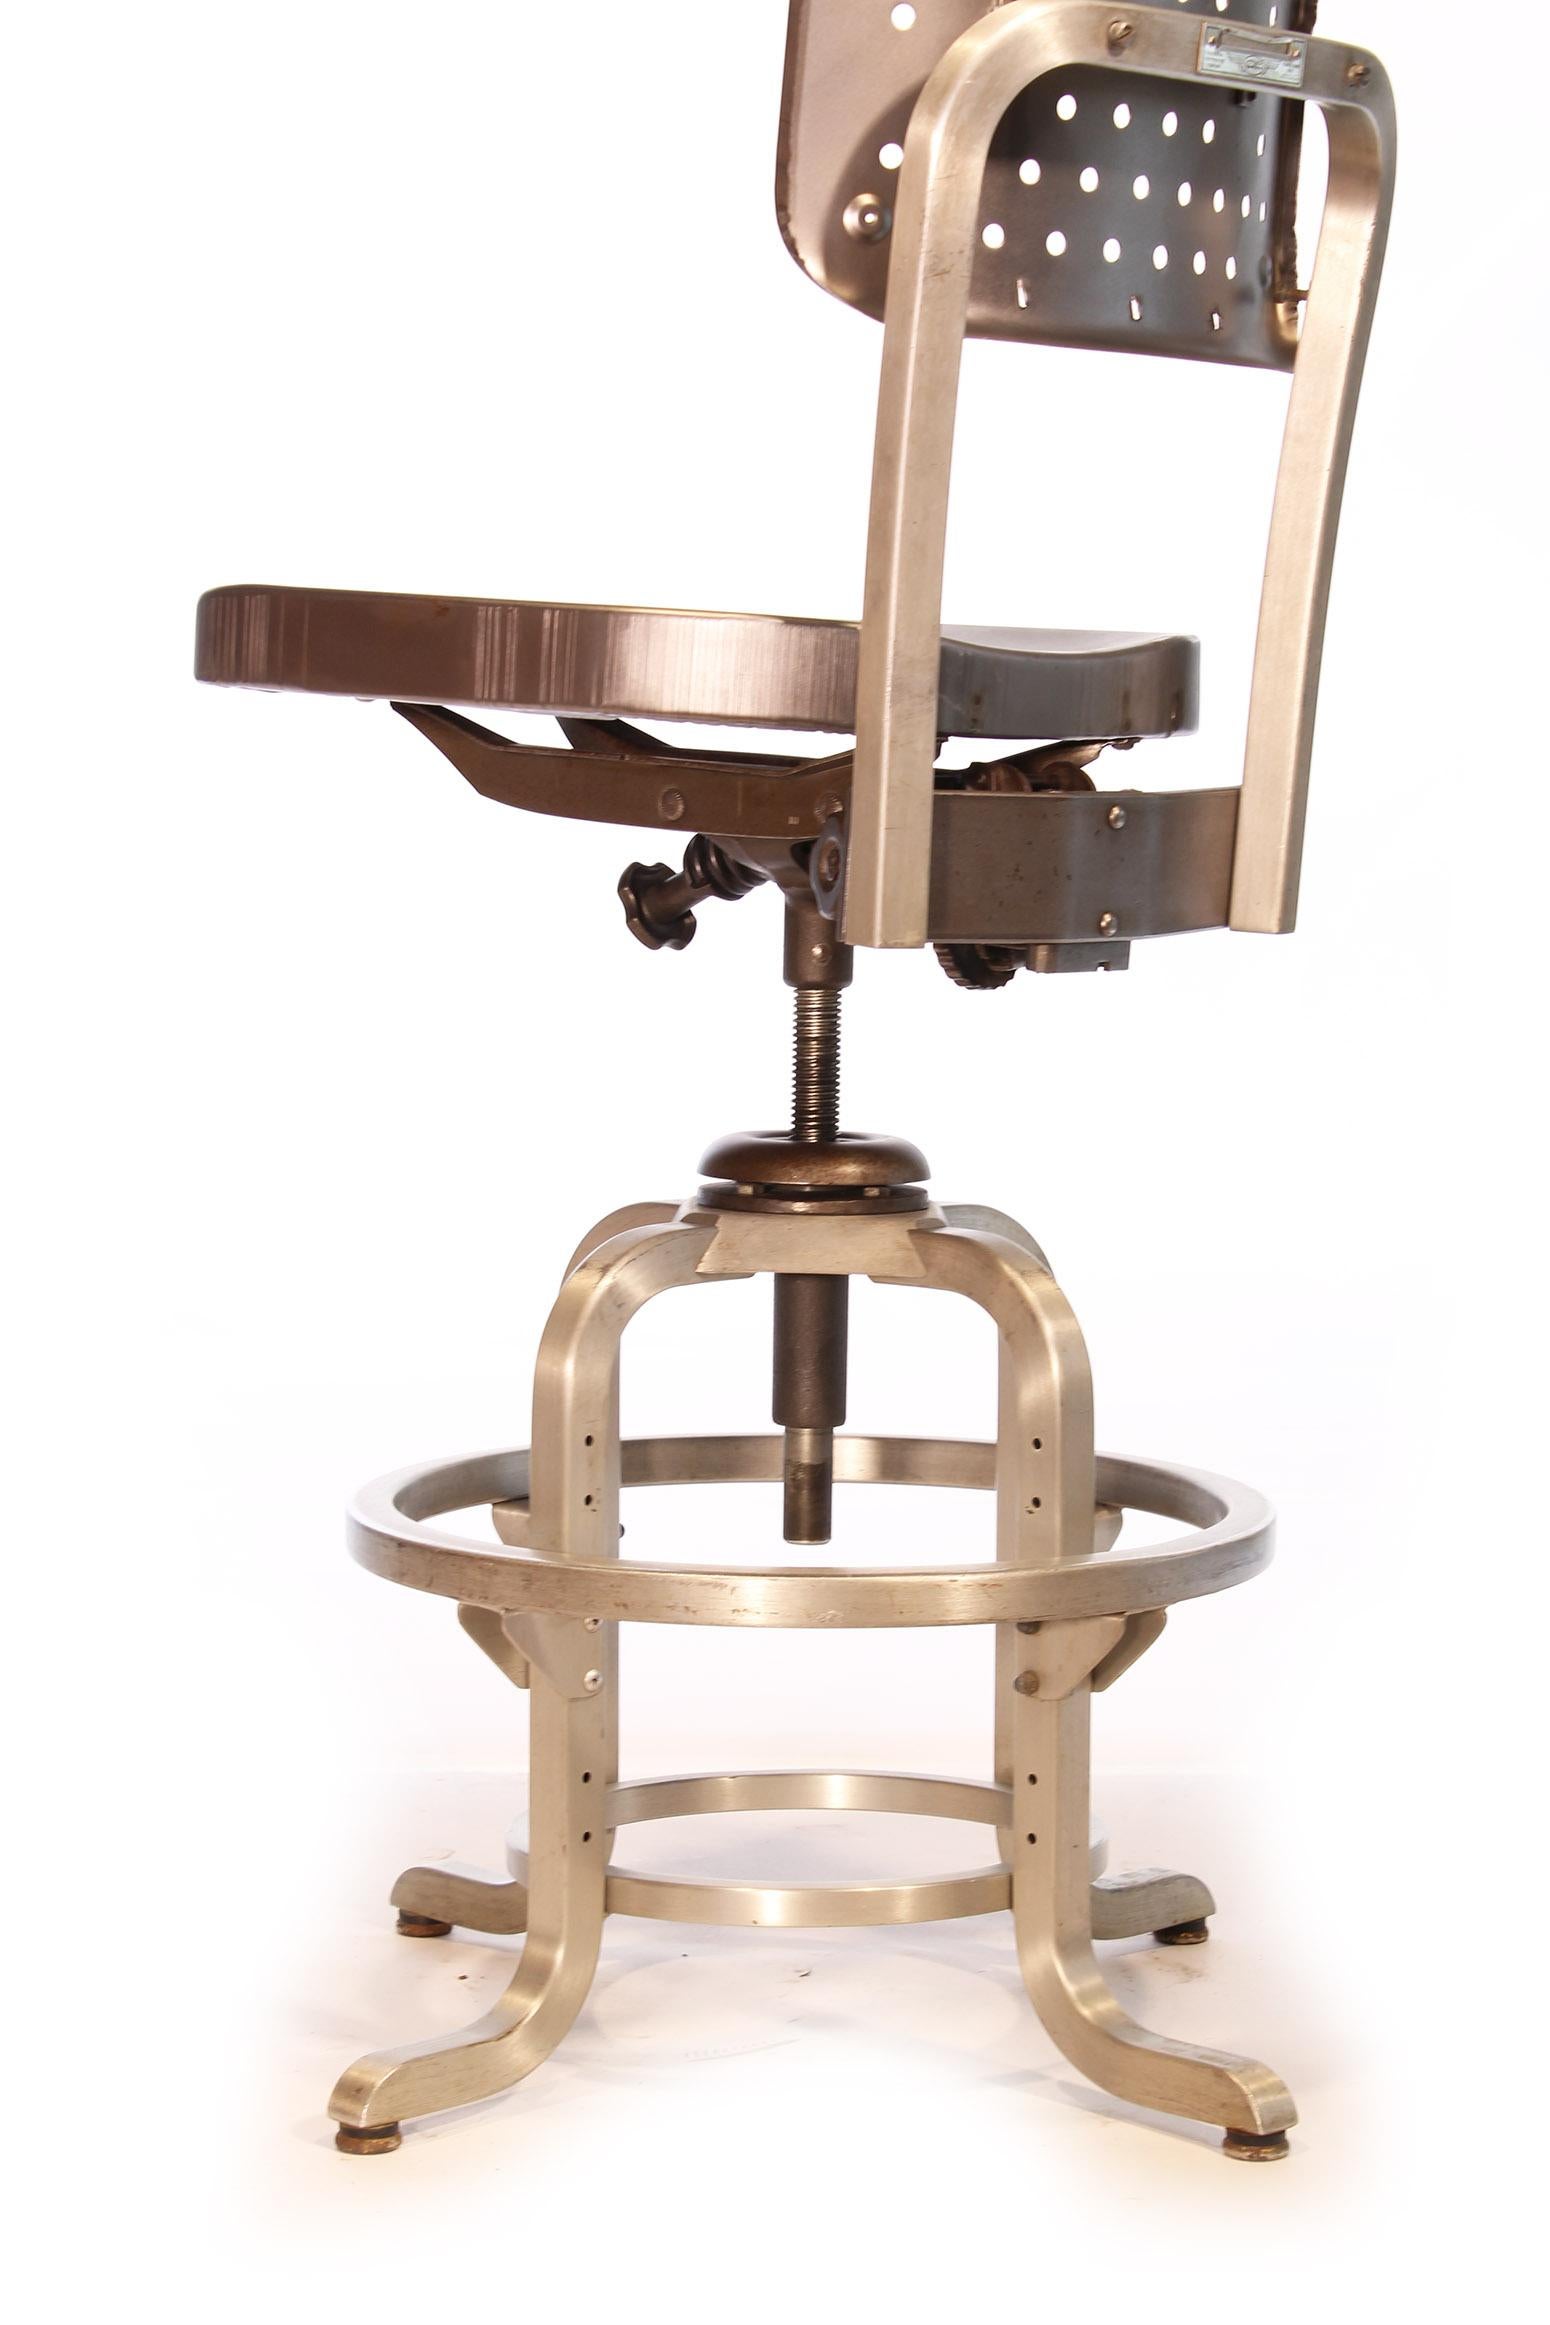 American Vintage Industrial GoodForm Adjustable Drafting Stool with Large Backrest